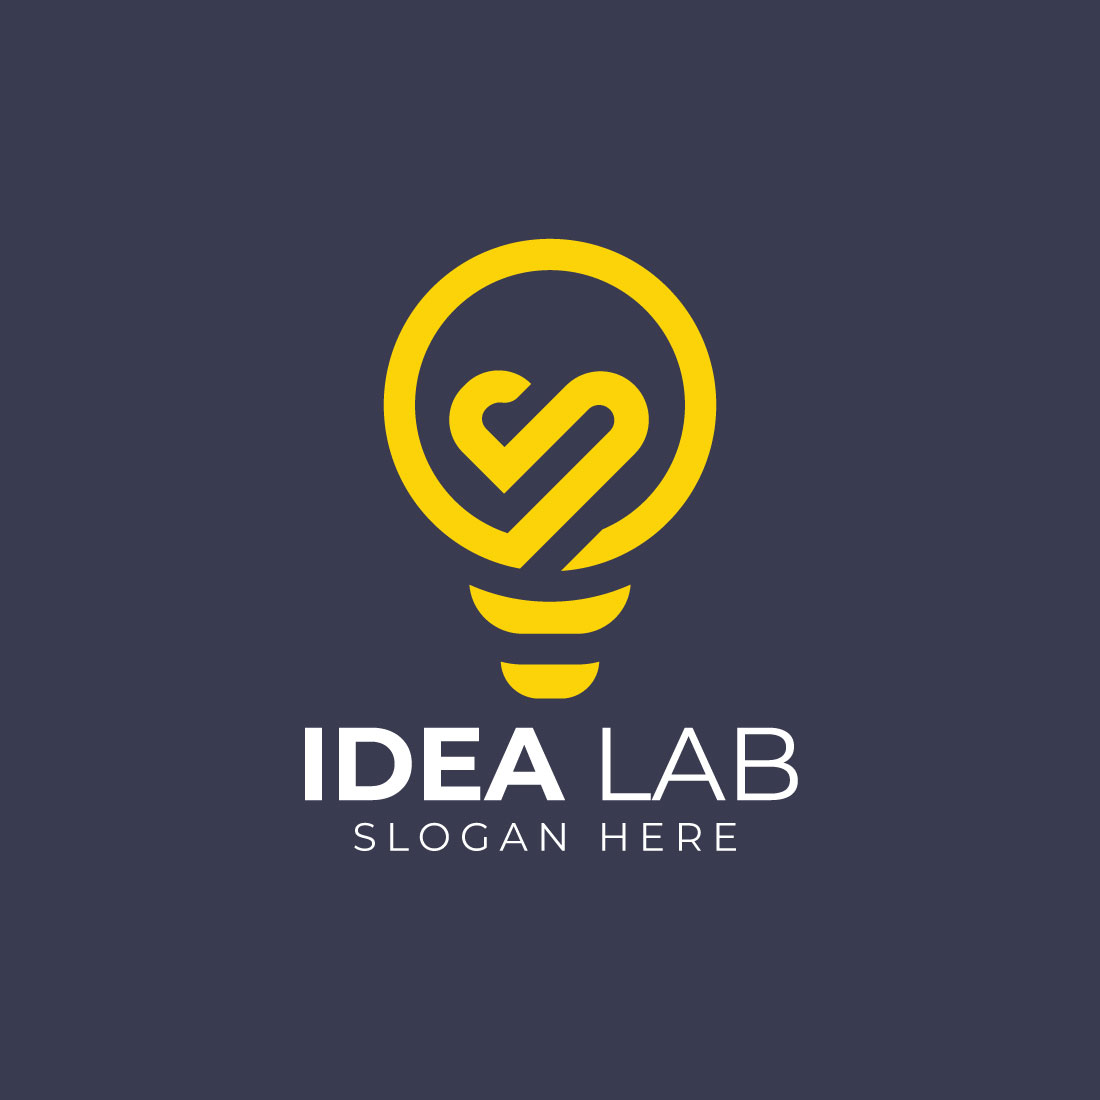 heart logo design ideas